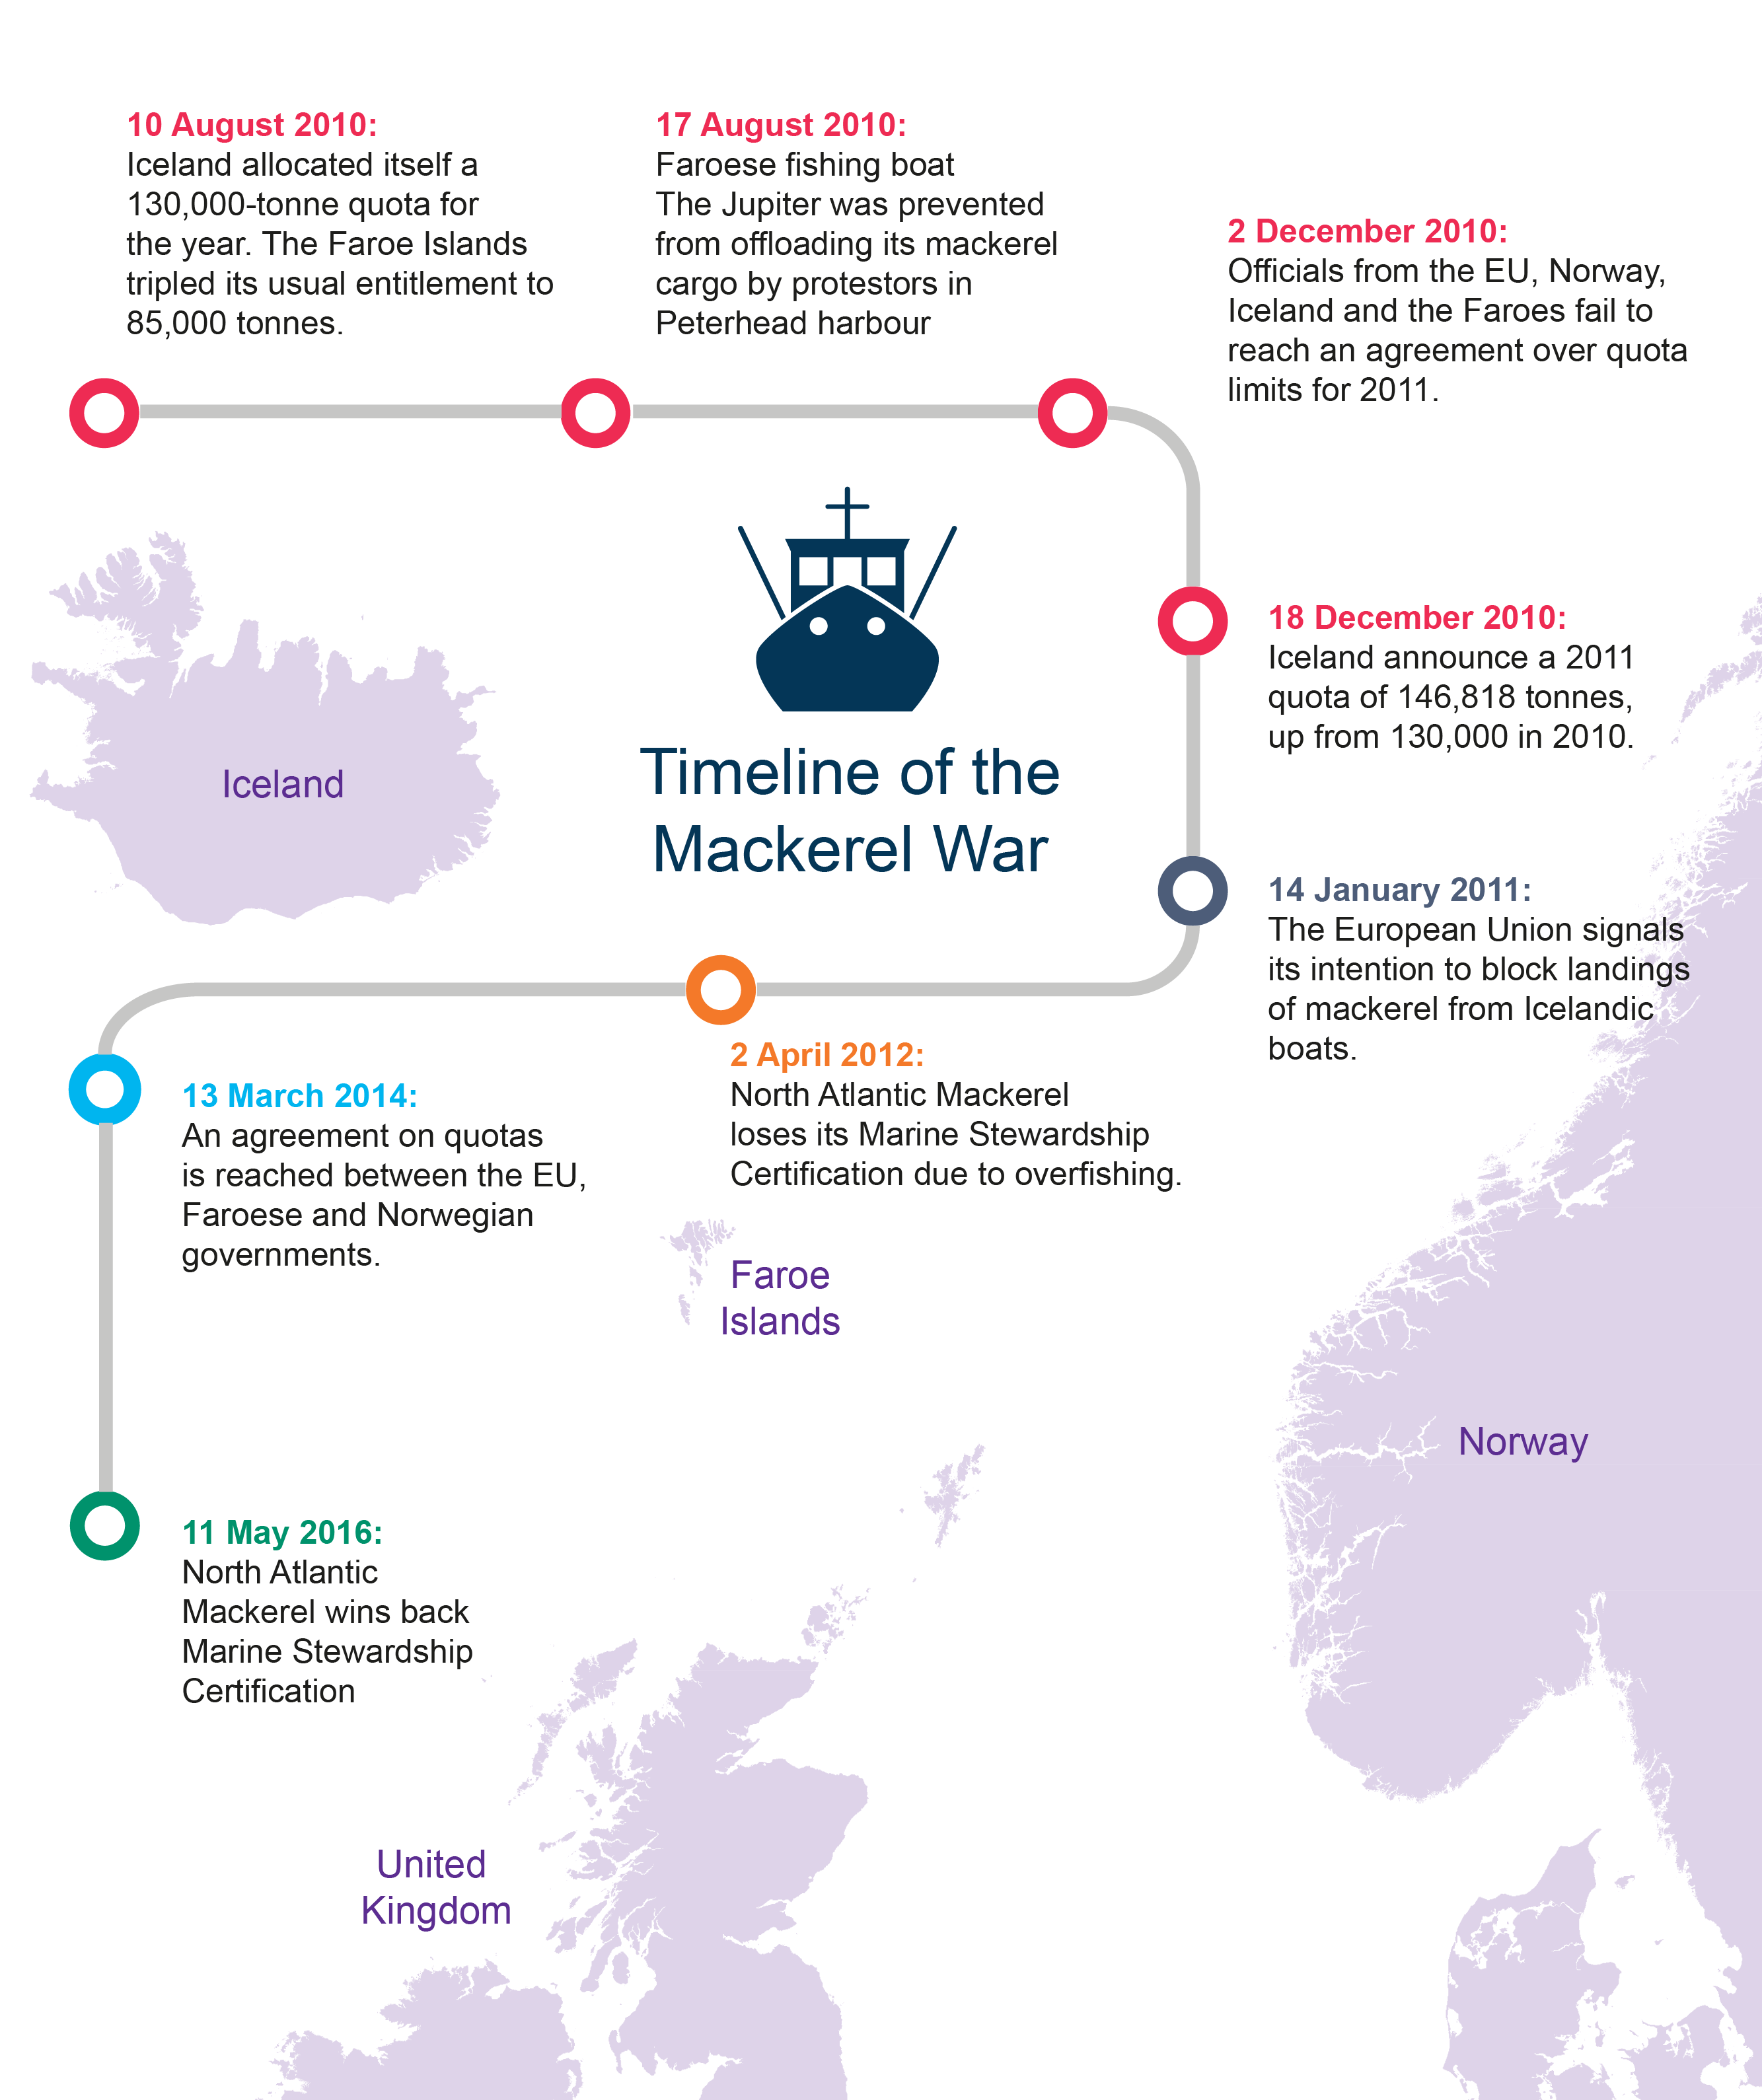 Timeline of the Mackerel War